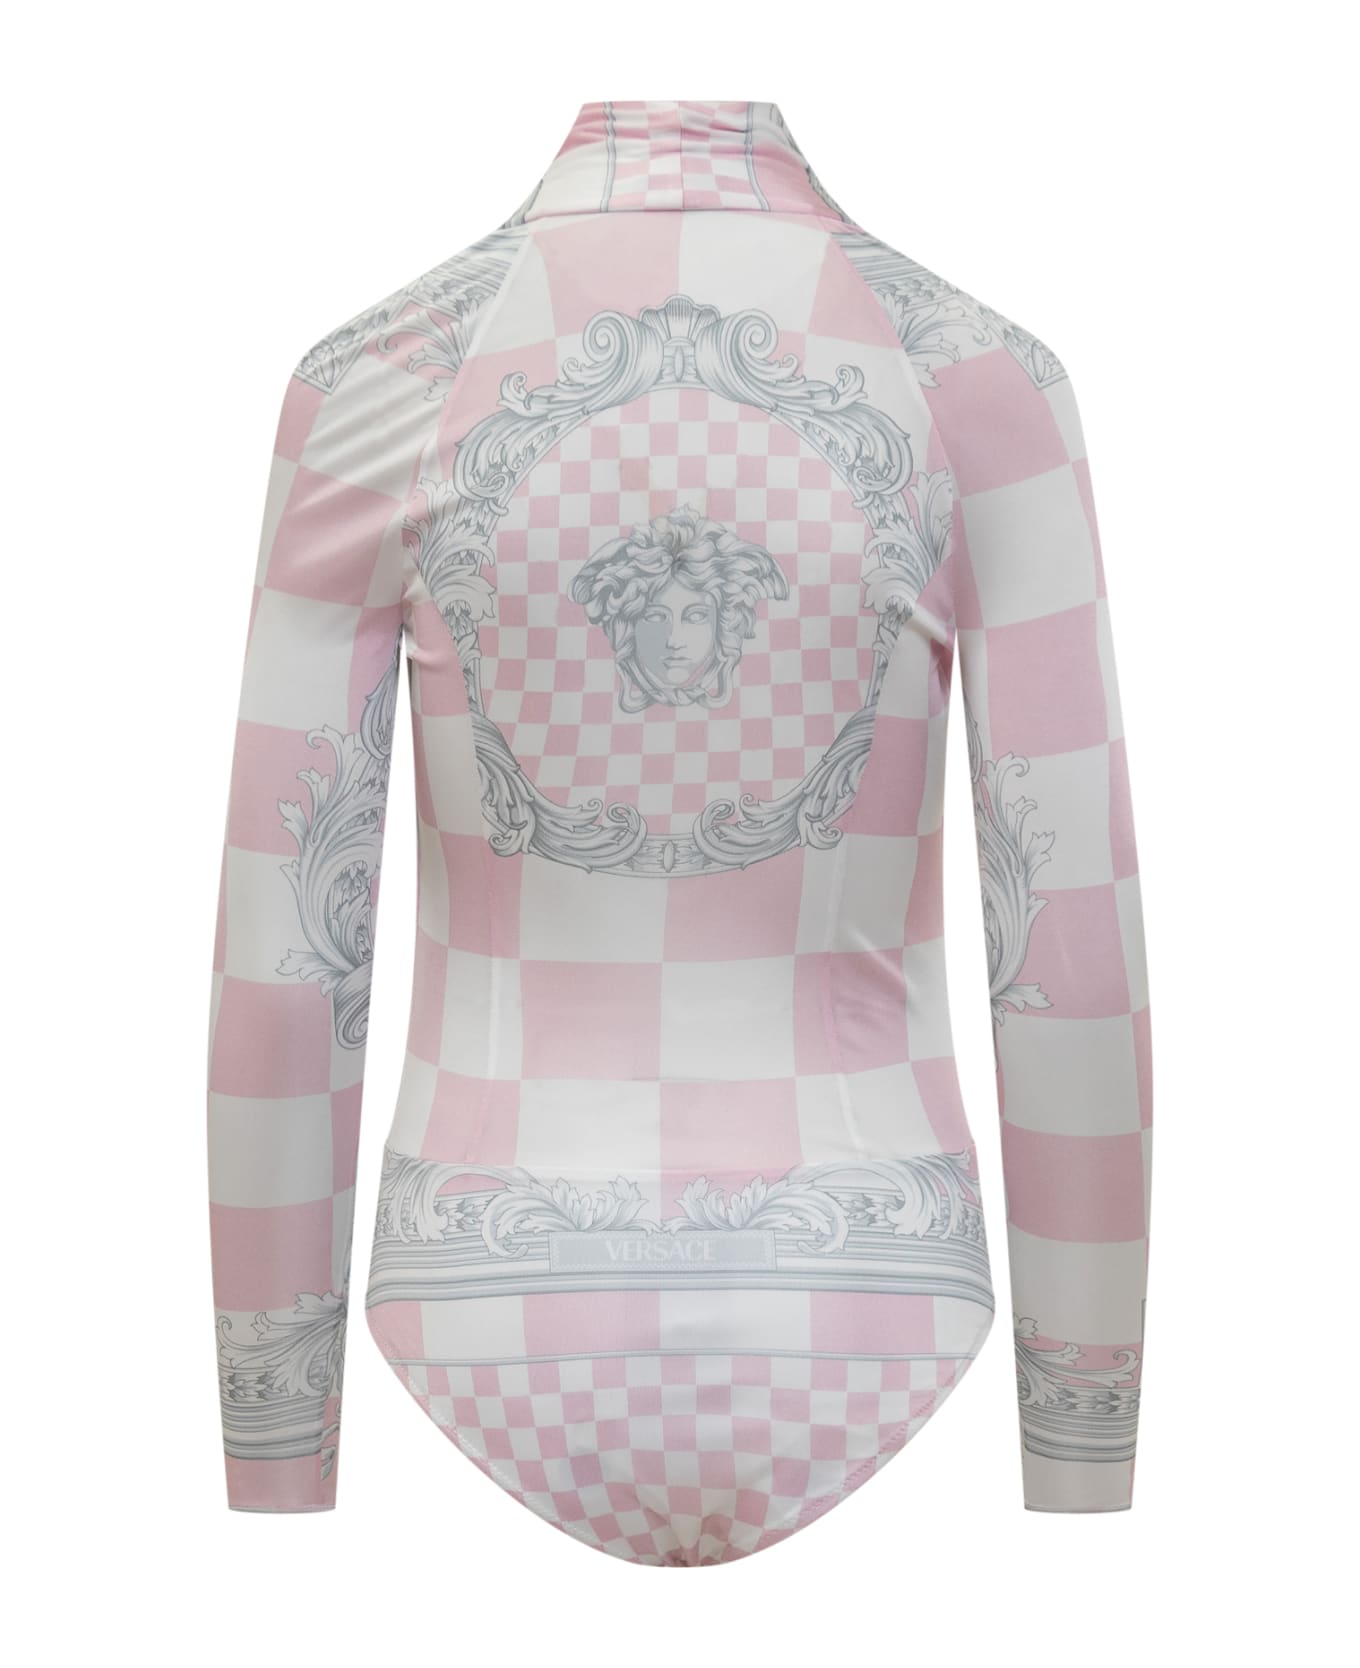 Versace Bodysuit With Medusa Motif - Pastel pink + white + silver